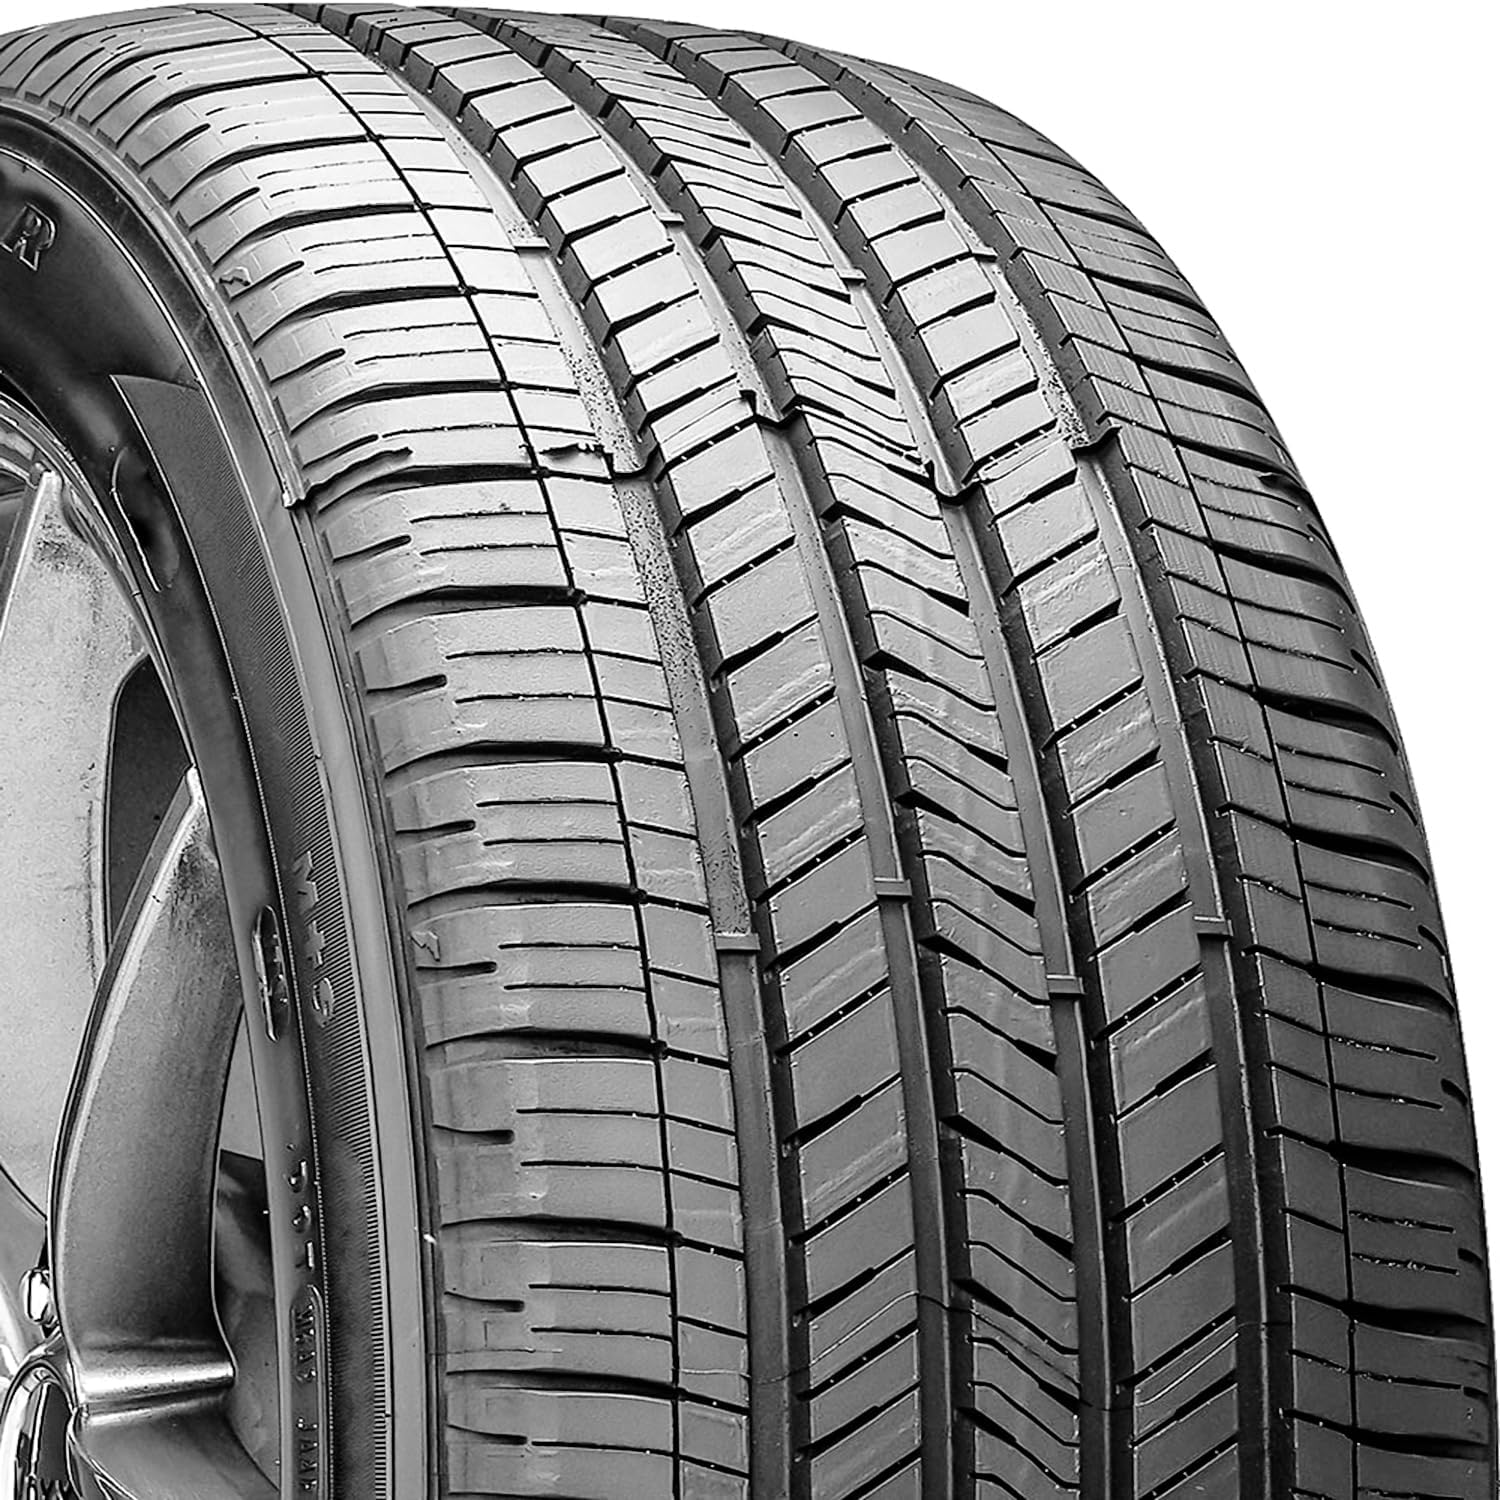 Goodyear Eagle Touring all_ Season Radial Tire-285/45R22 114H - Goodyear Eagle Touring Tire-285/45R22 114H Review